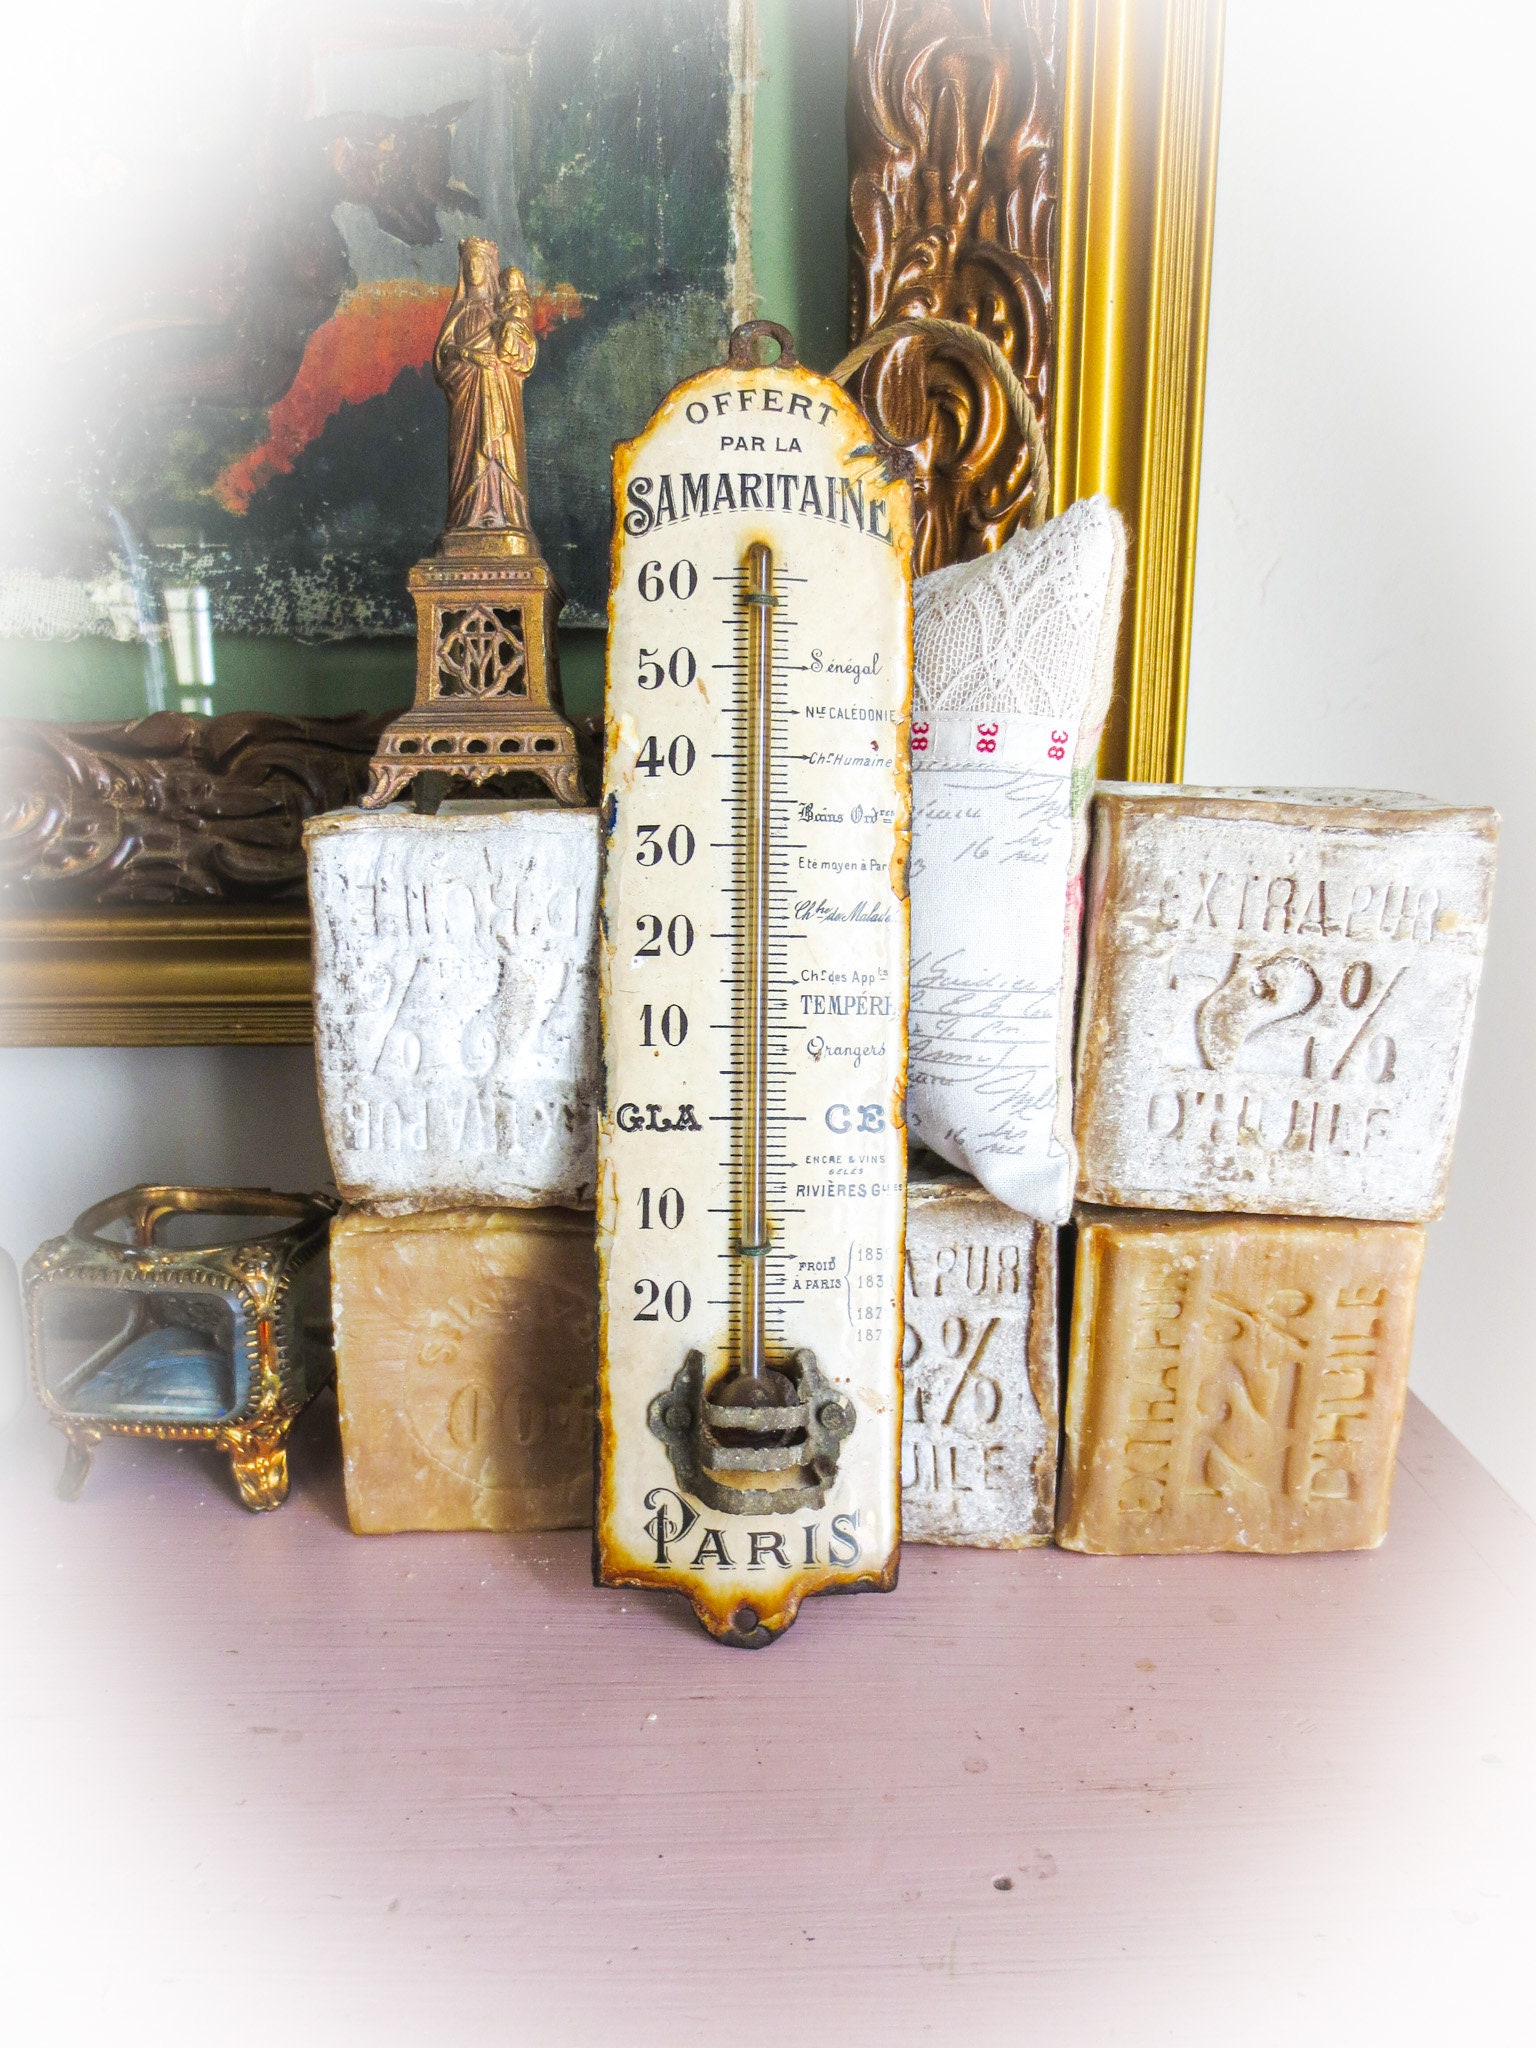 Antique Bronze Swan Desk Thermometer All Original Working